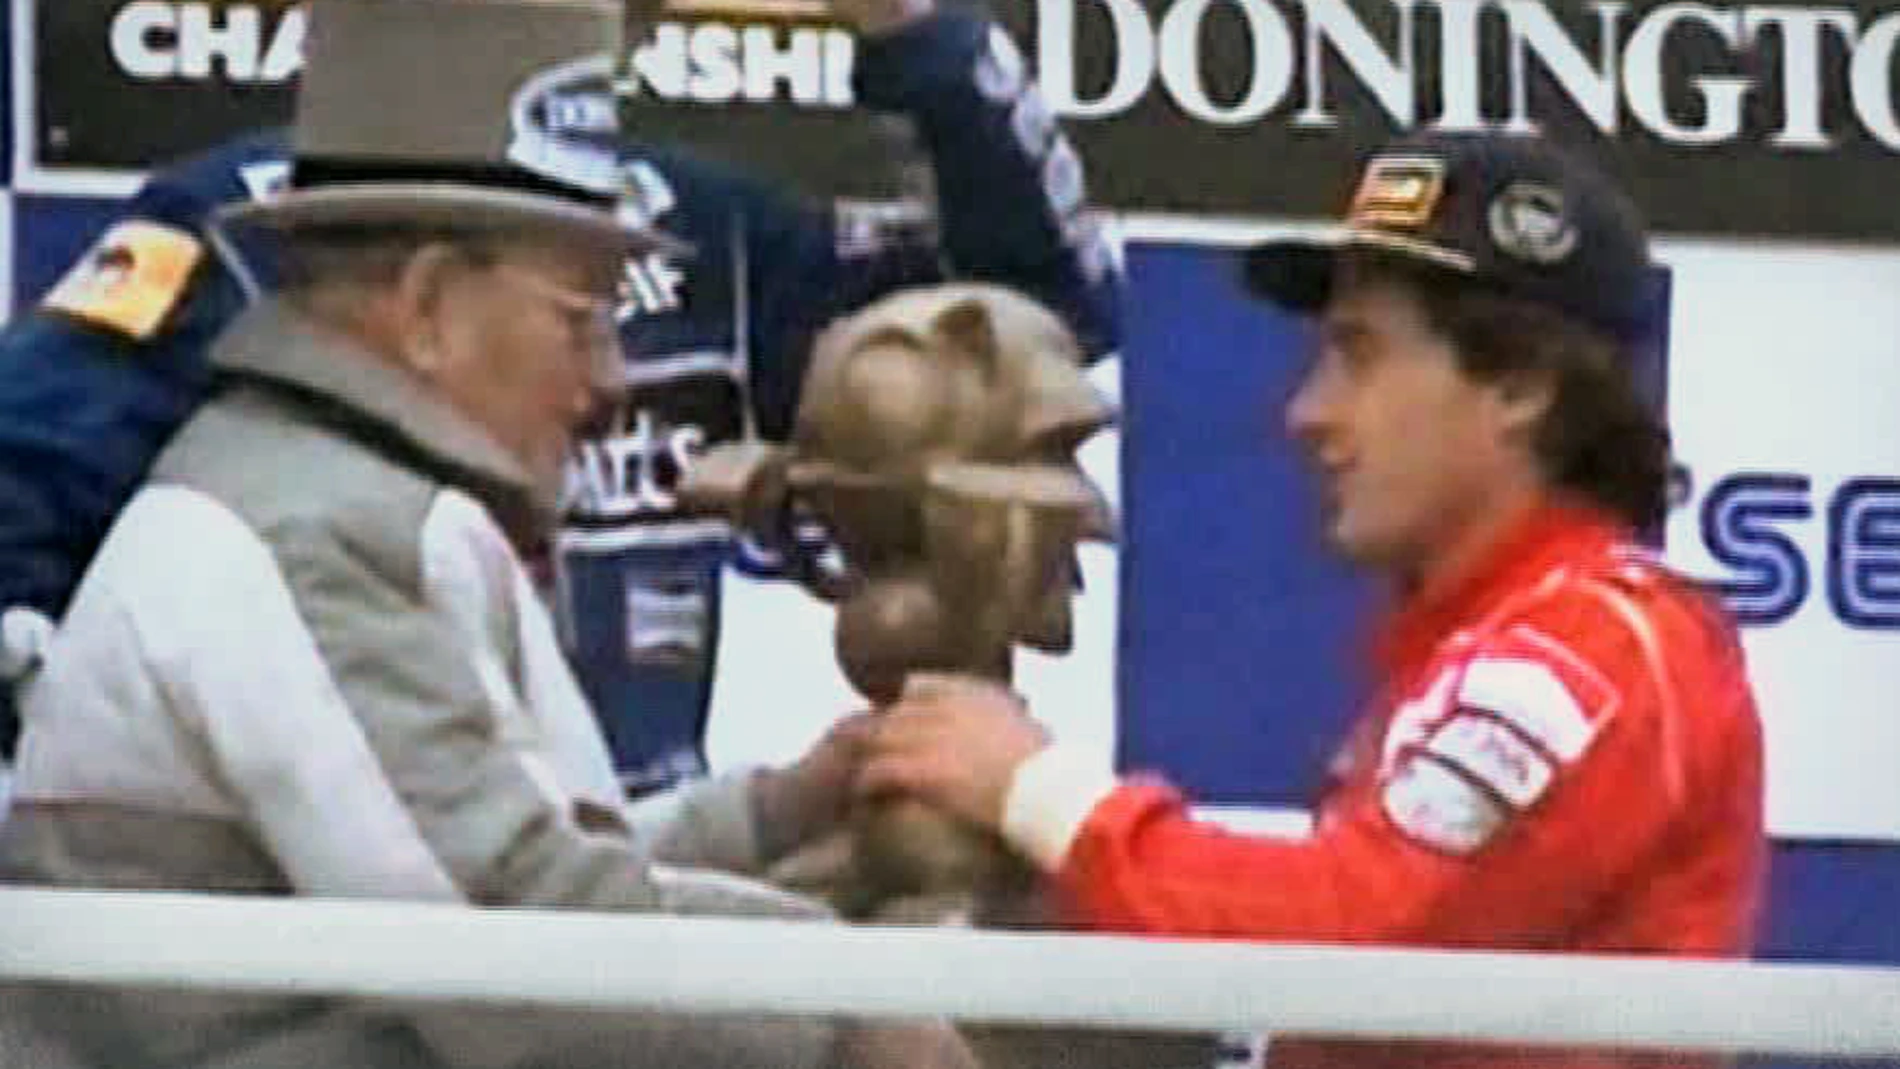 Senna levanta el trofeo Sonic